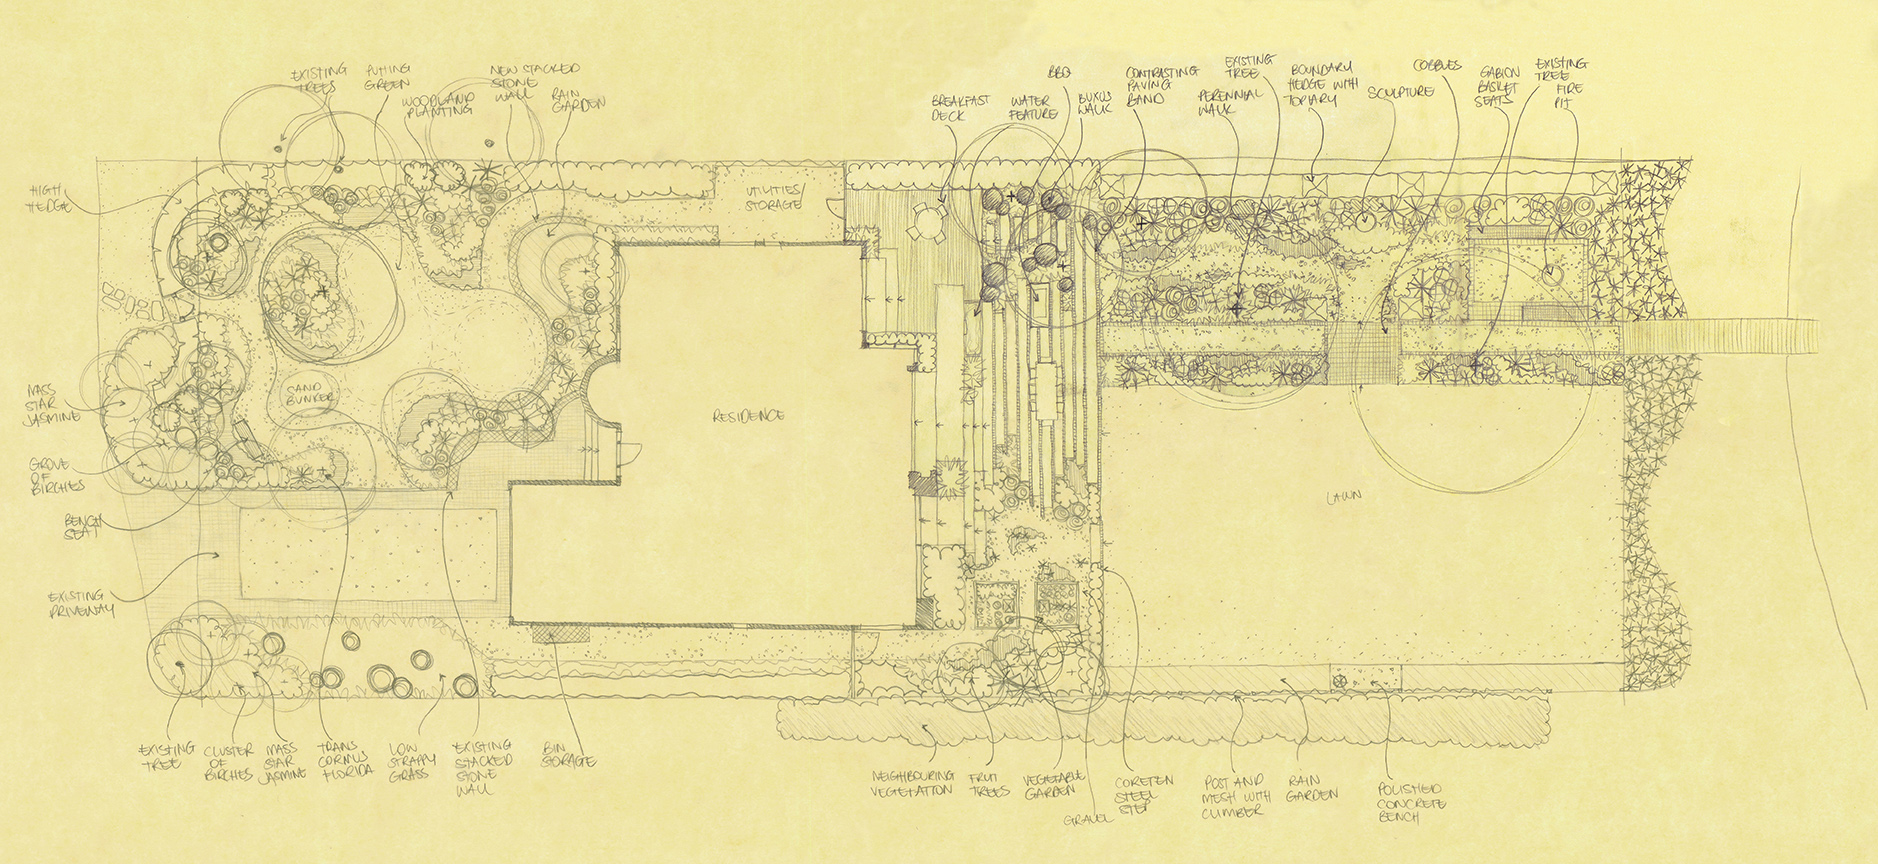 Concept sketch for garden in Westport Connecticut designed my Melbourne landscape design company Ian Barker Gardens. 